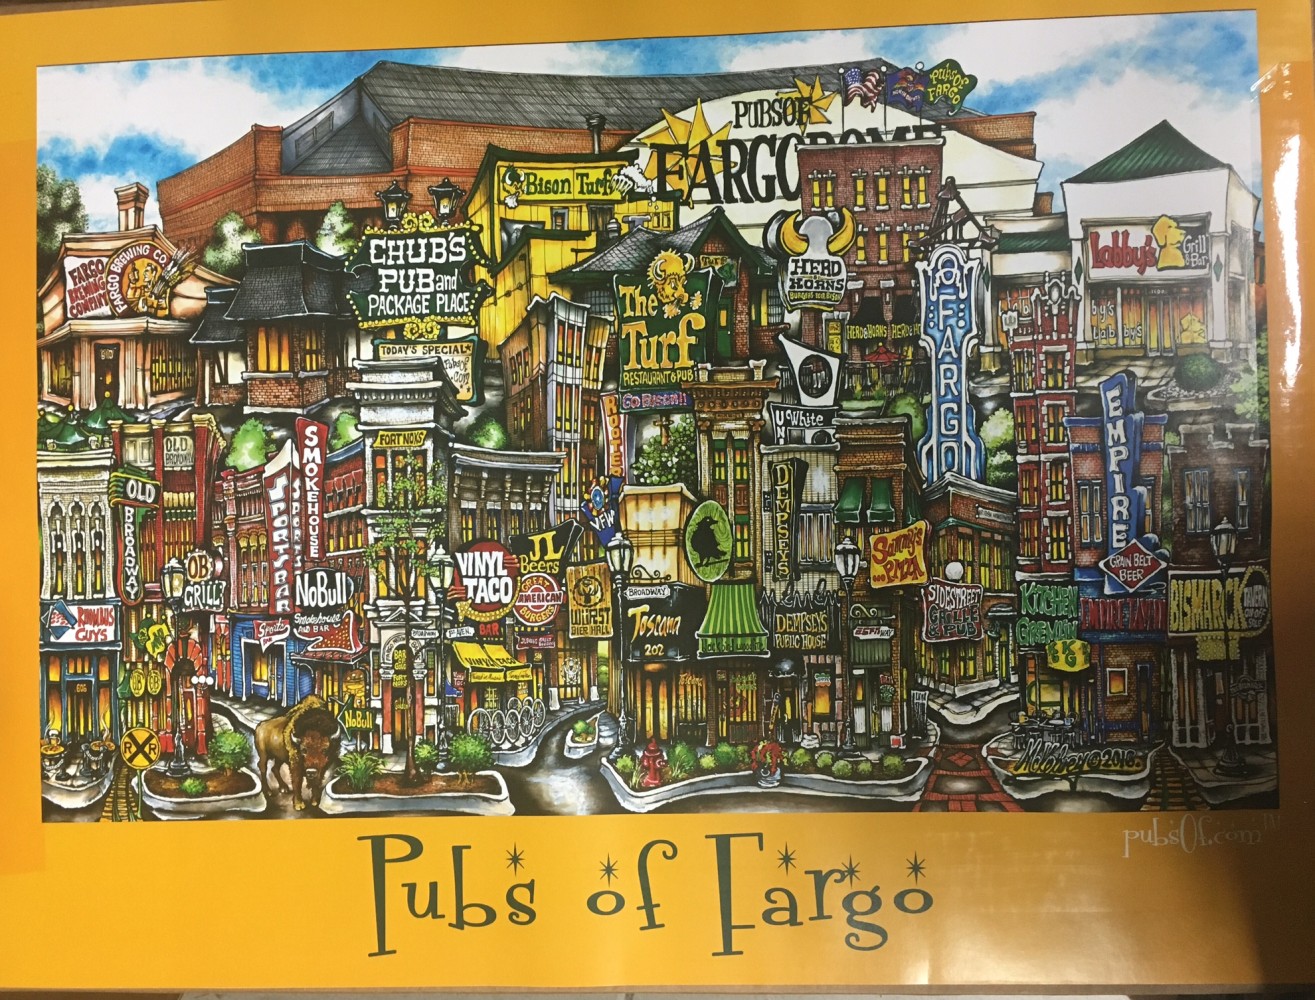 byld Skælde ud Dykker pubsOf Fargo, ND - (poster) • pubsOf.yourTown